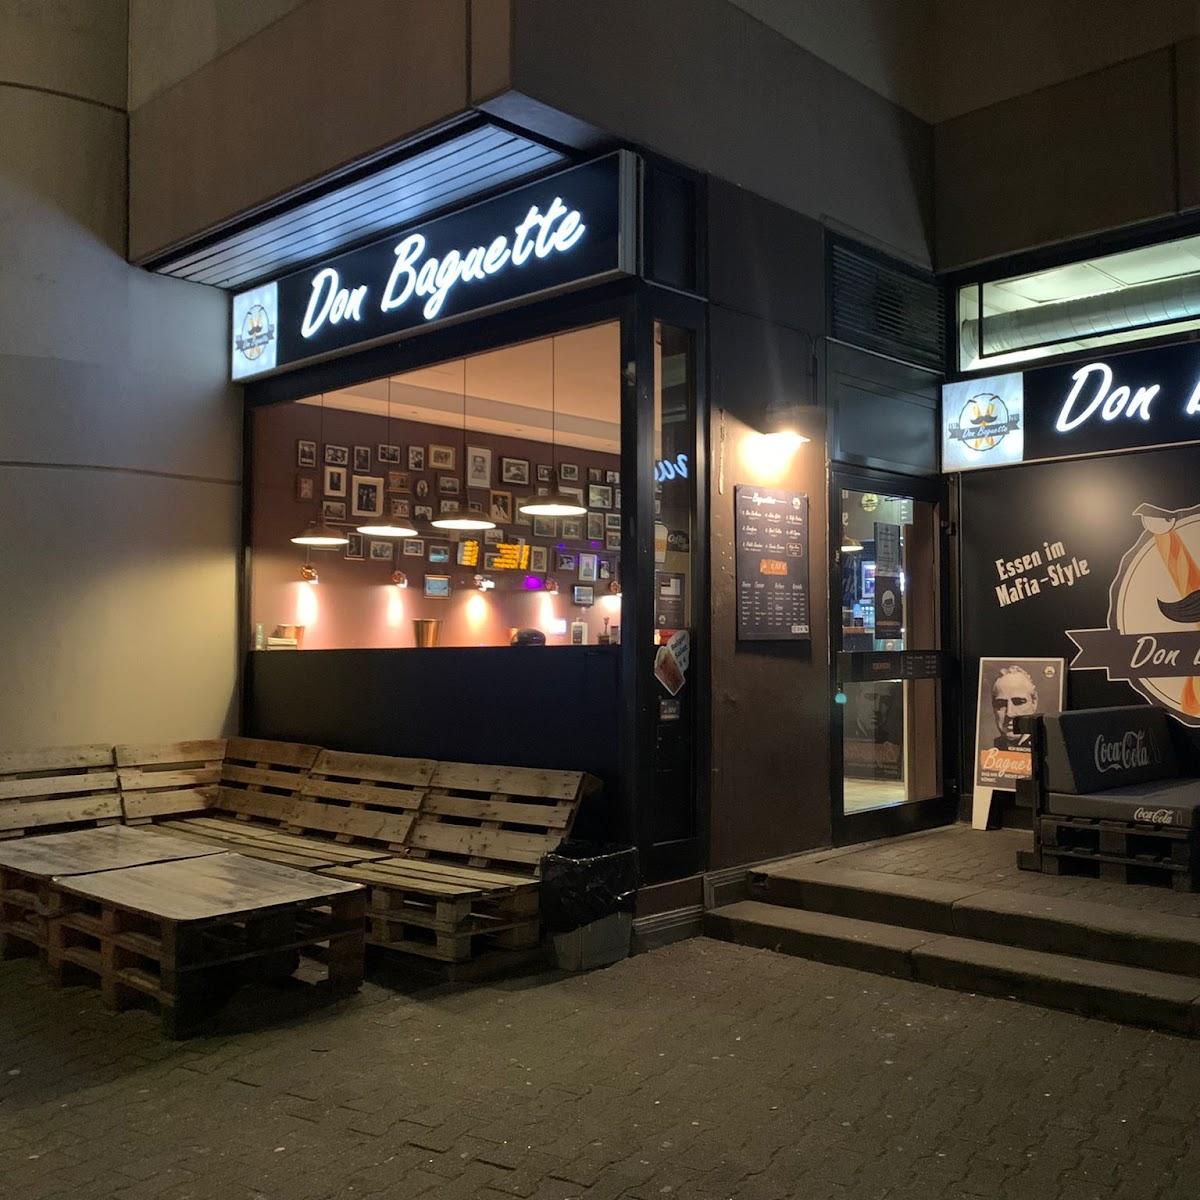 Restaurant "Don Baguette" in Mainz